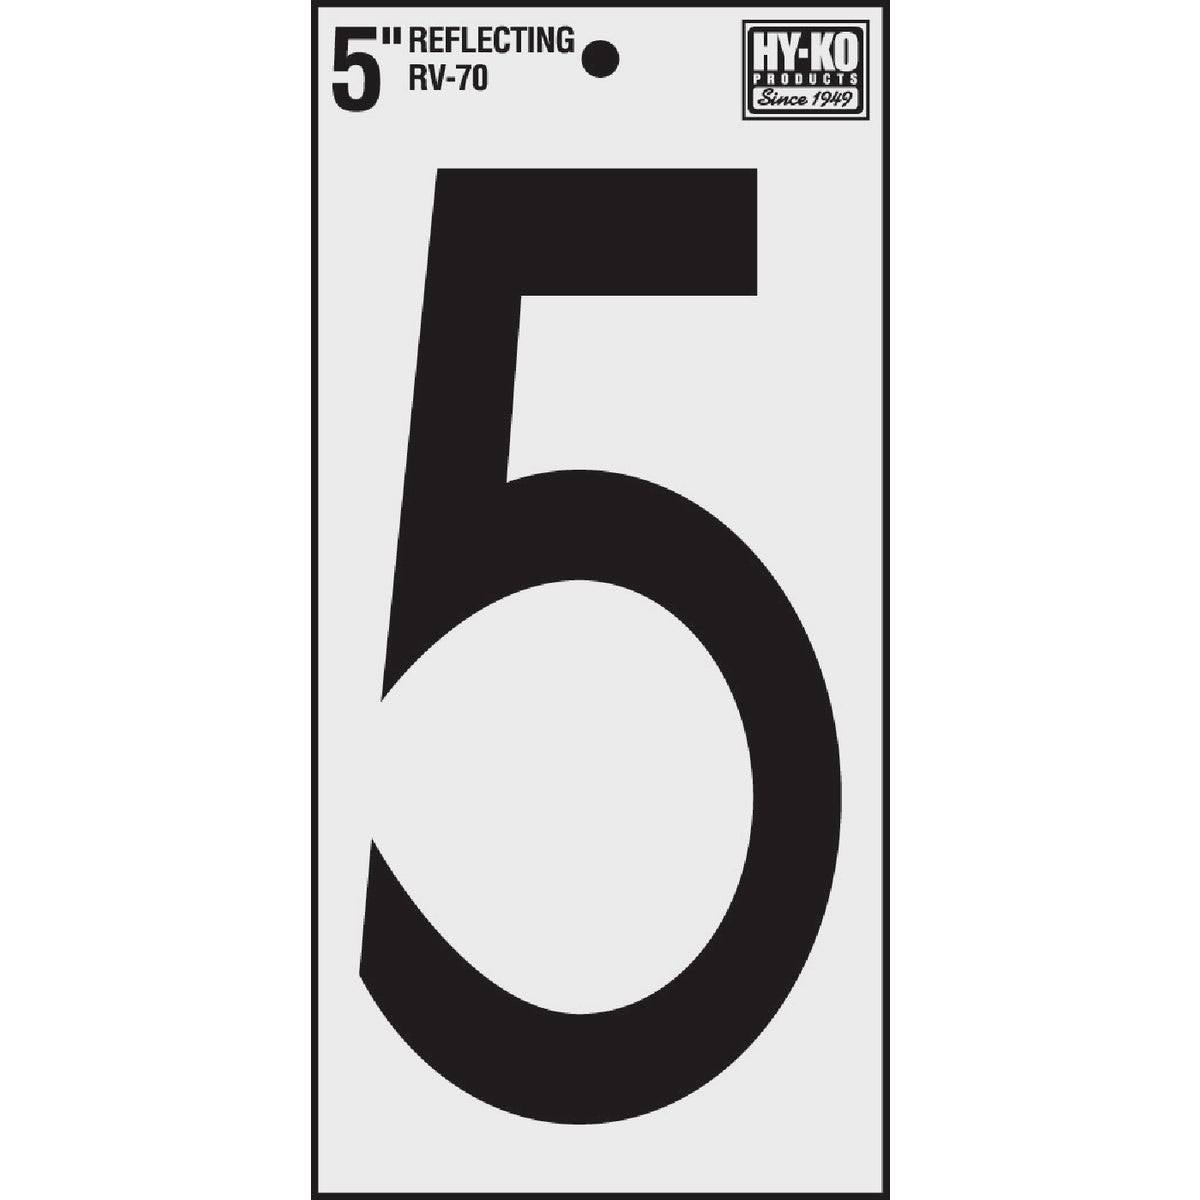 Hy-Ko Vinyl Reflective House Number - "5", 5"